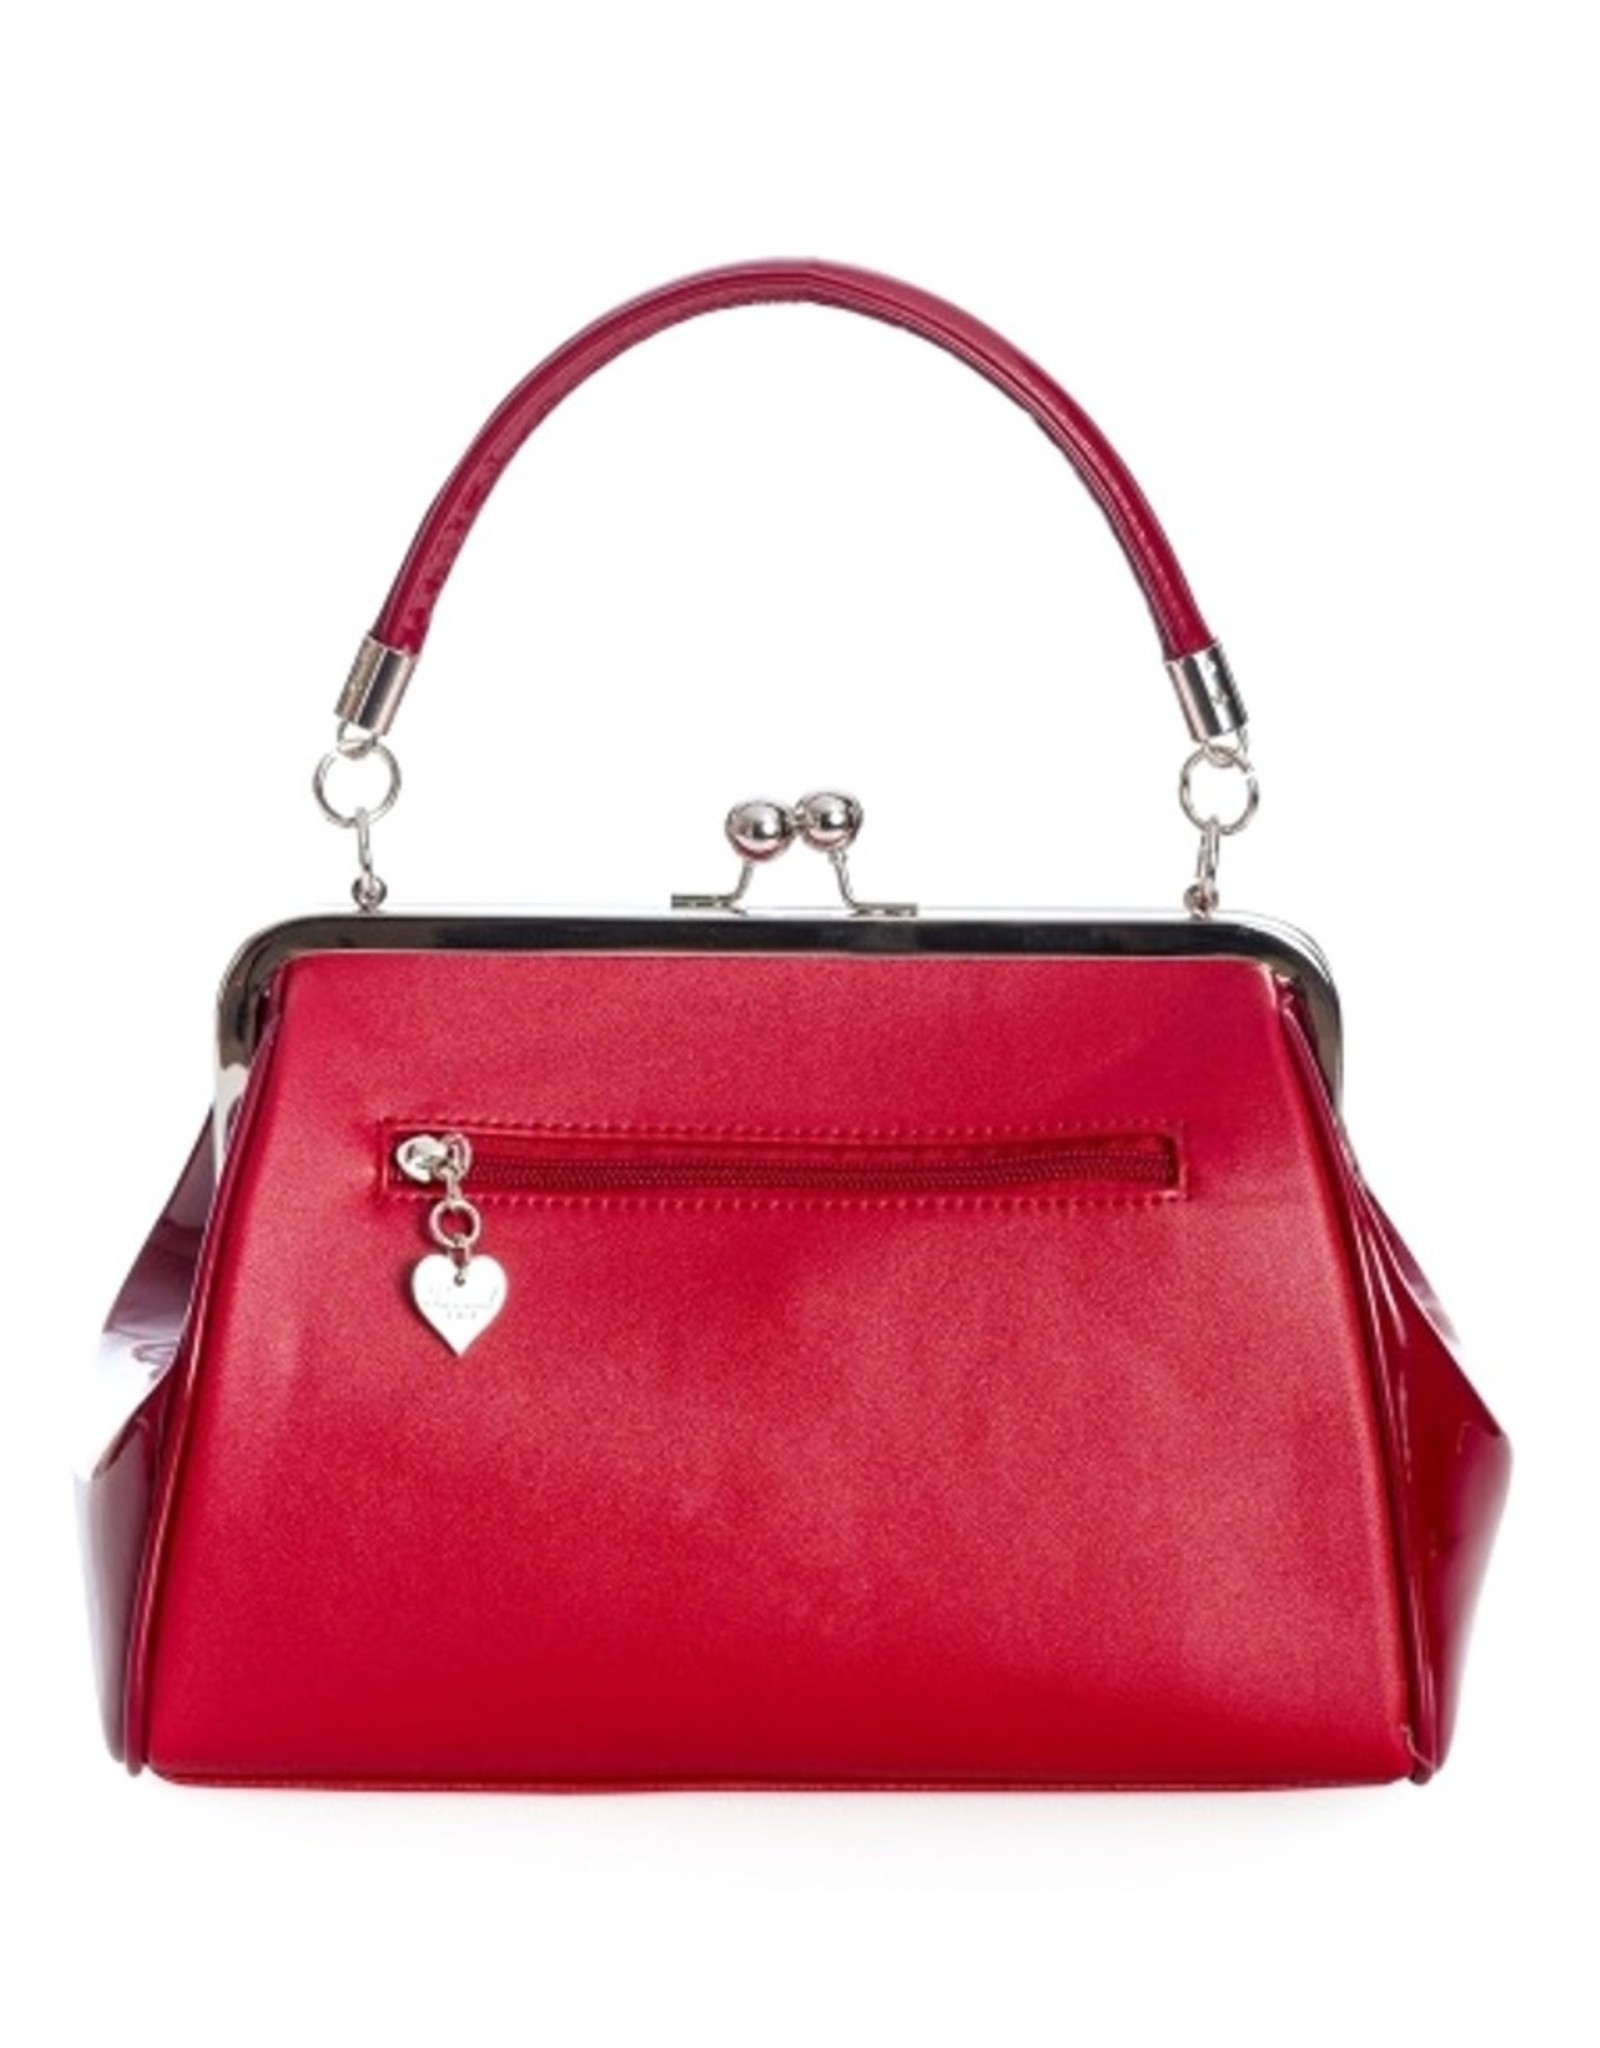 Banned Retro bags  Vintage bags - 1950's Retro Hollywood Glam Clasp Handbag  (Red)